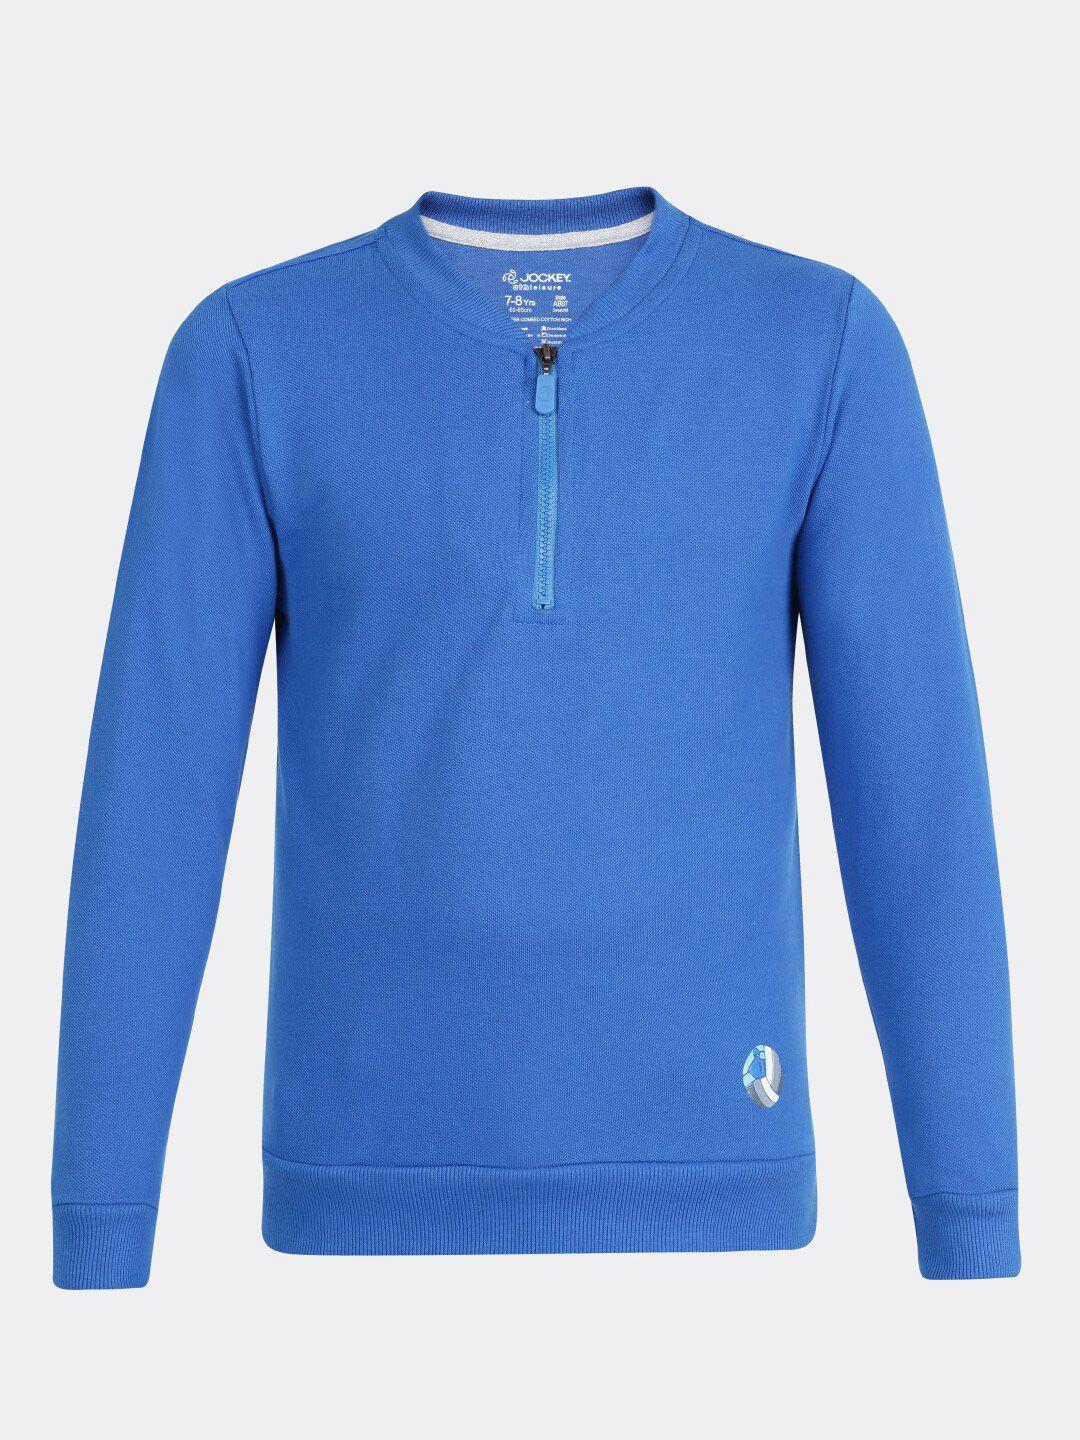 jockey boys blue sweatshirt